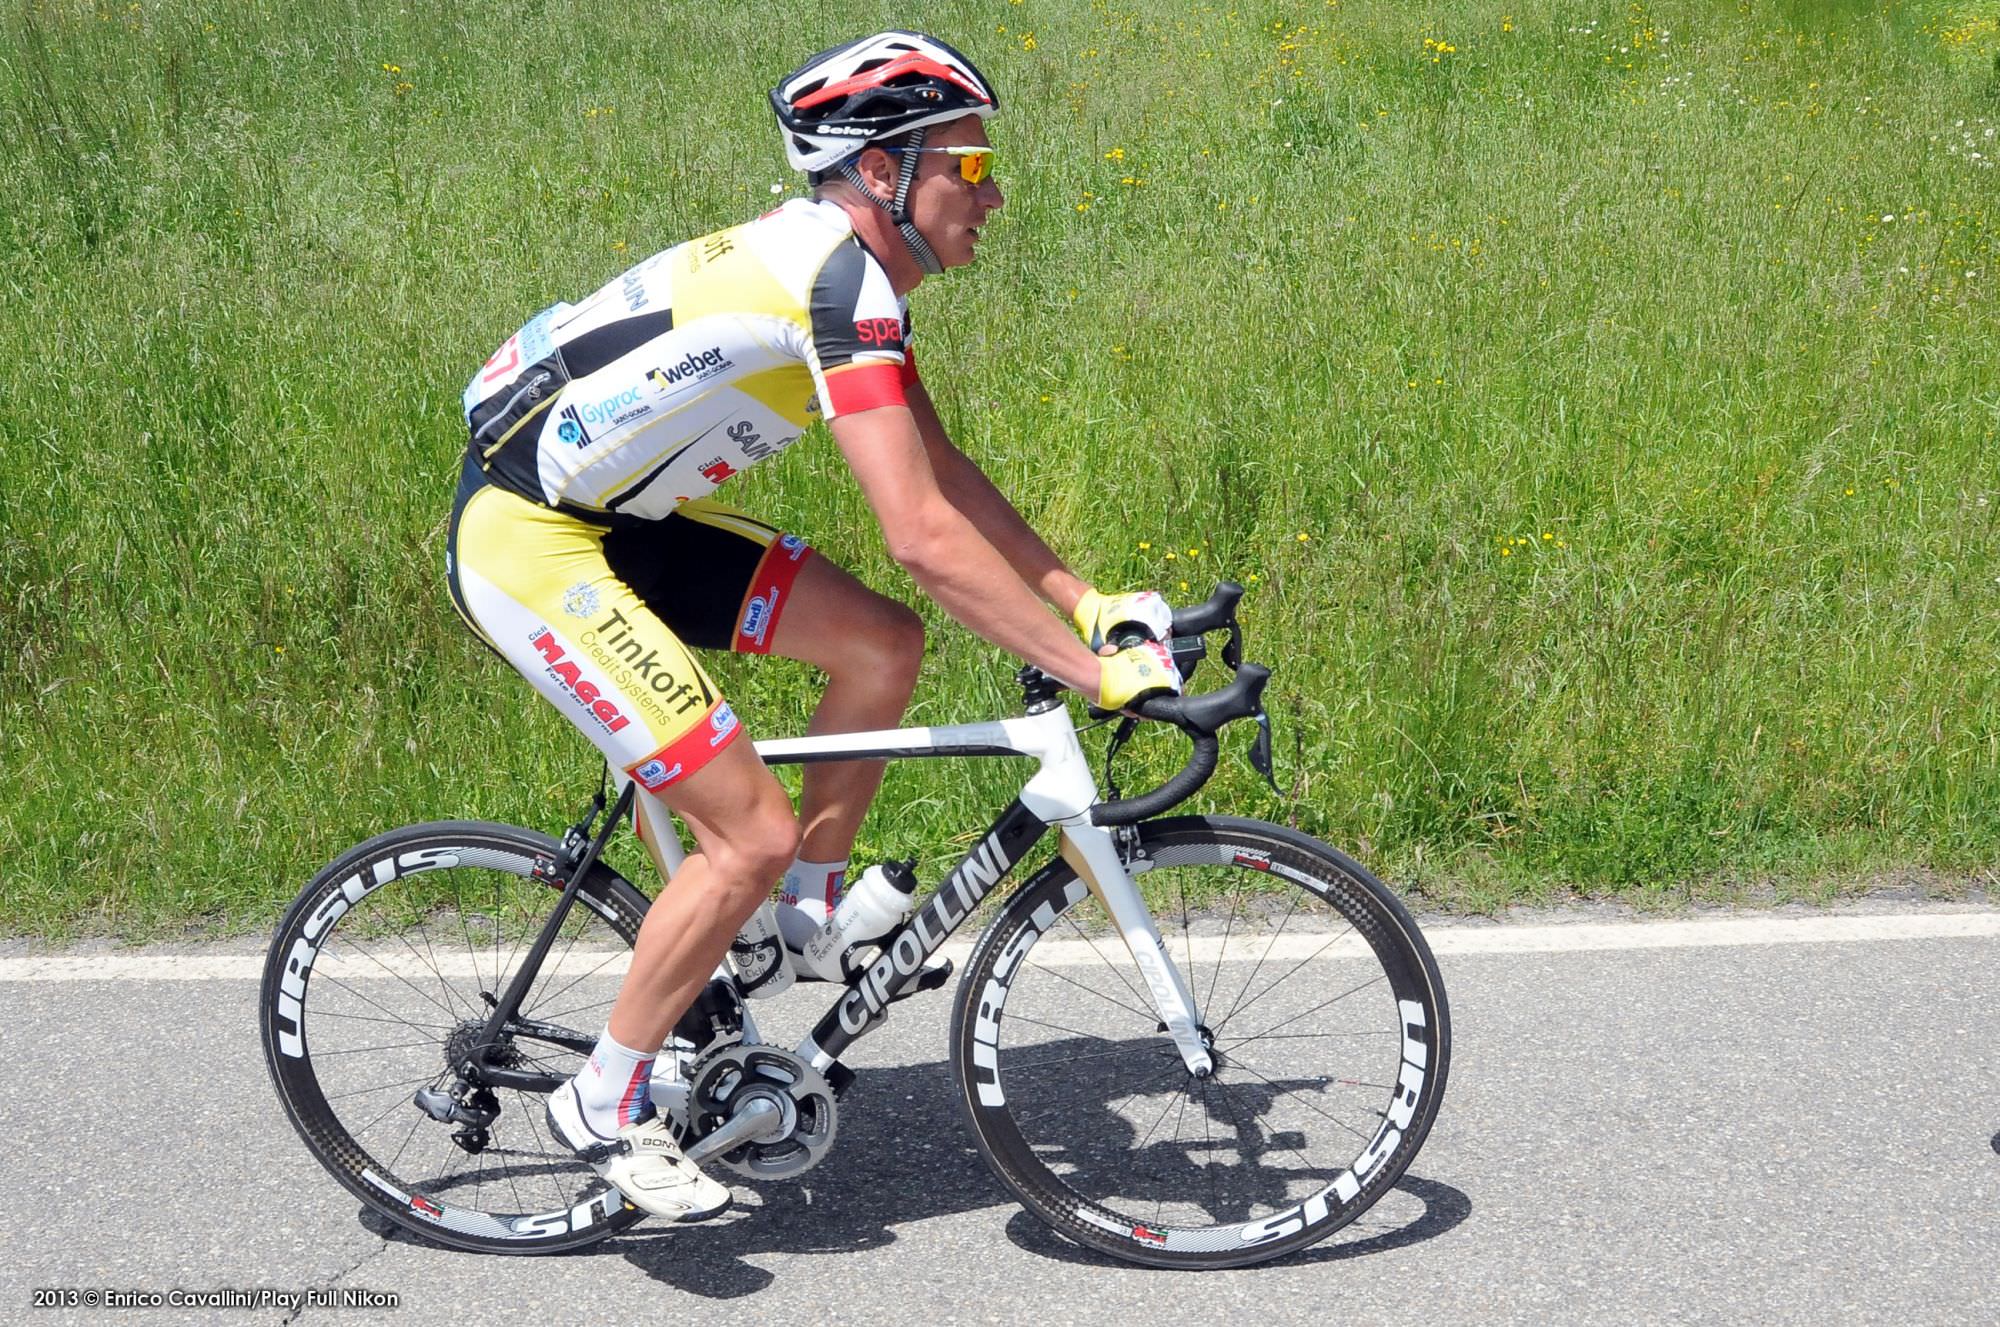 Nikita Esmov (Velo Club Maggi) vince il Giro del Friuli